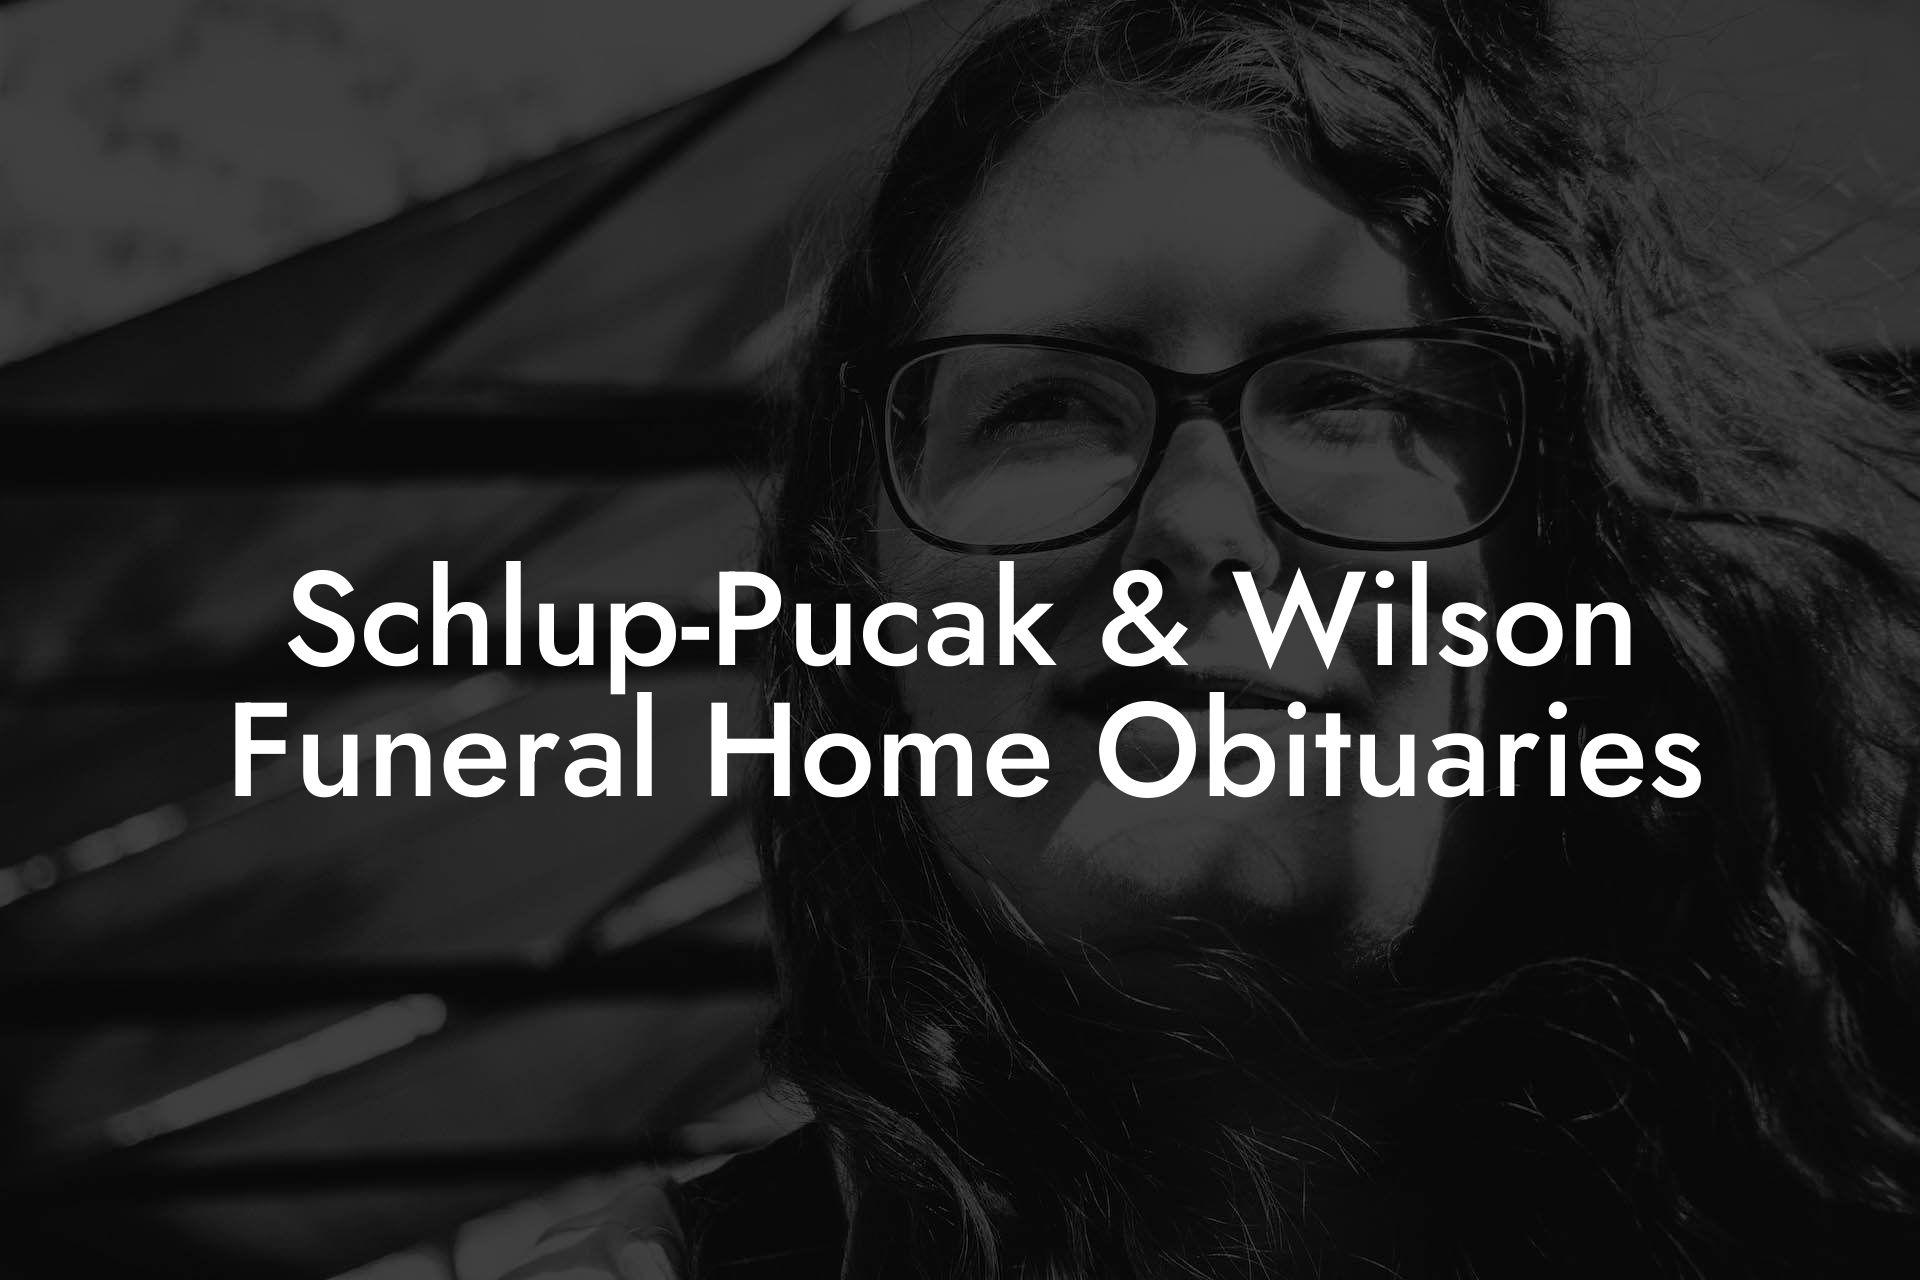 Schlup-Pucak & Wilson Funeral Home Obituaries